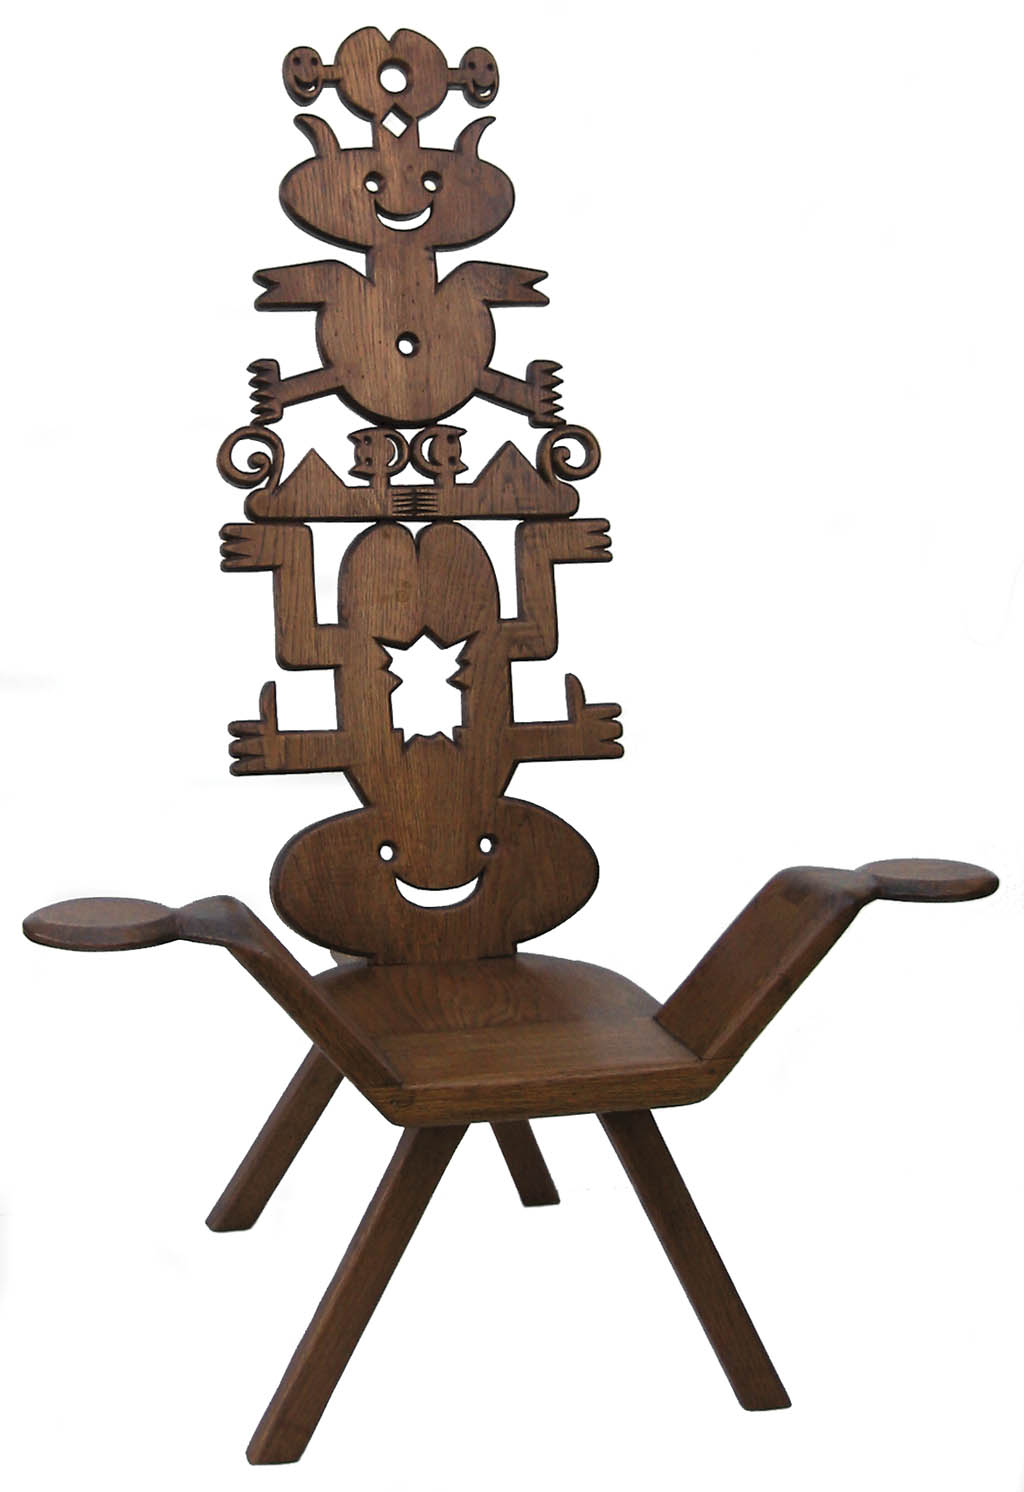 Roberto Matta - Totem Chair - 1980 wood sculpture